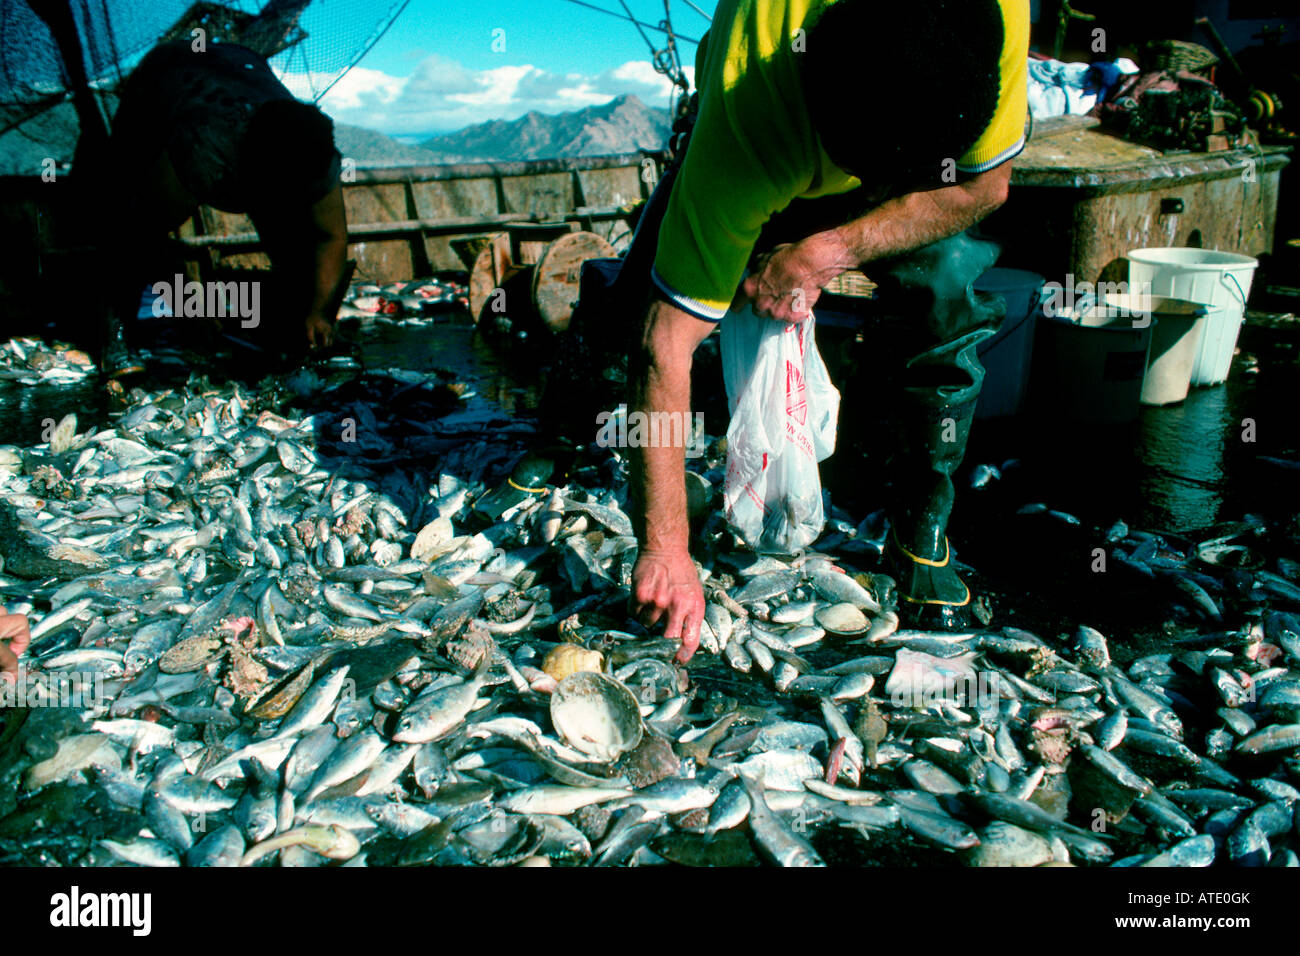 Shrimp commercial fishery using destructive otter trawl nets, Sea of Cortez, Mexico. Stock Photo